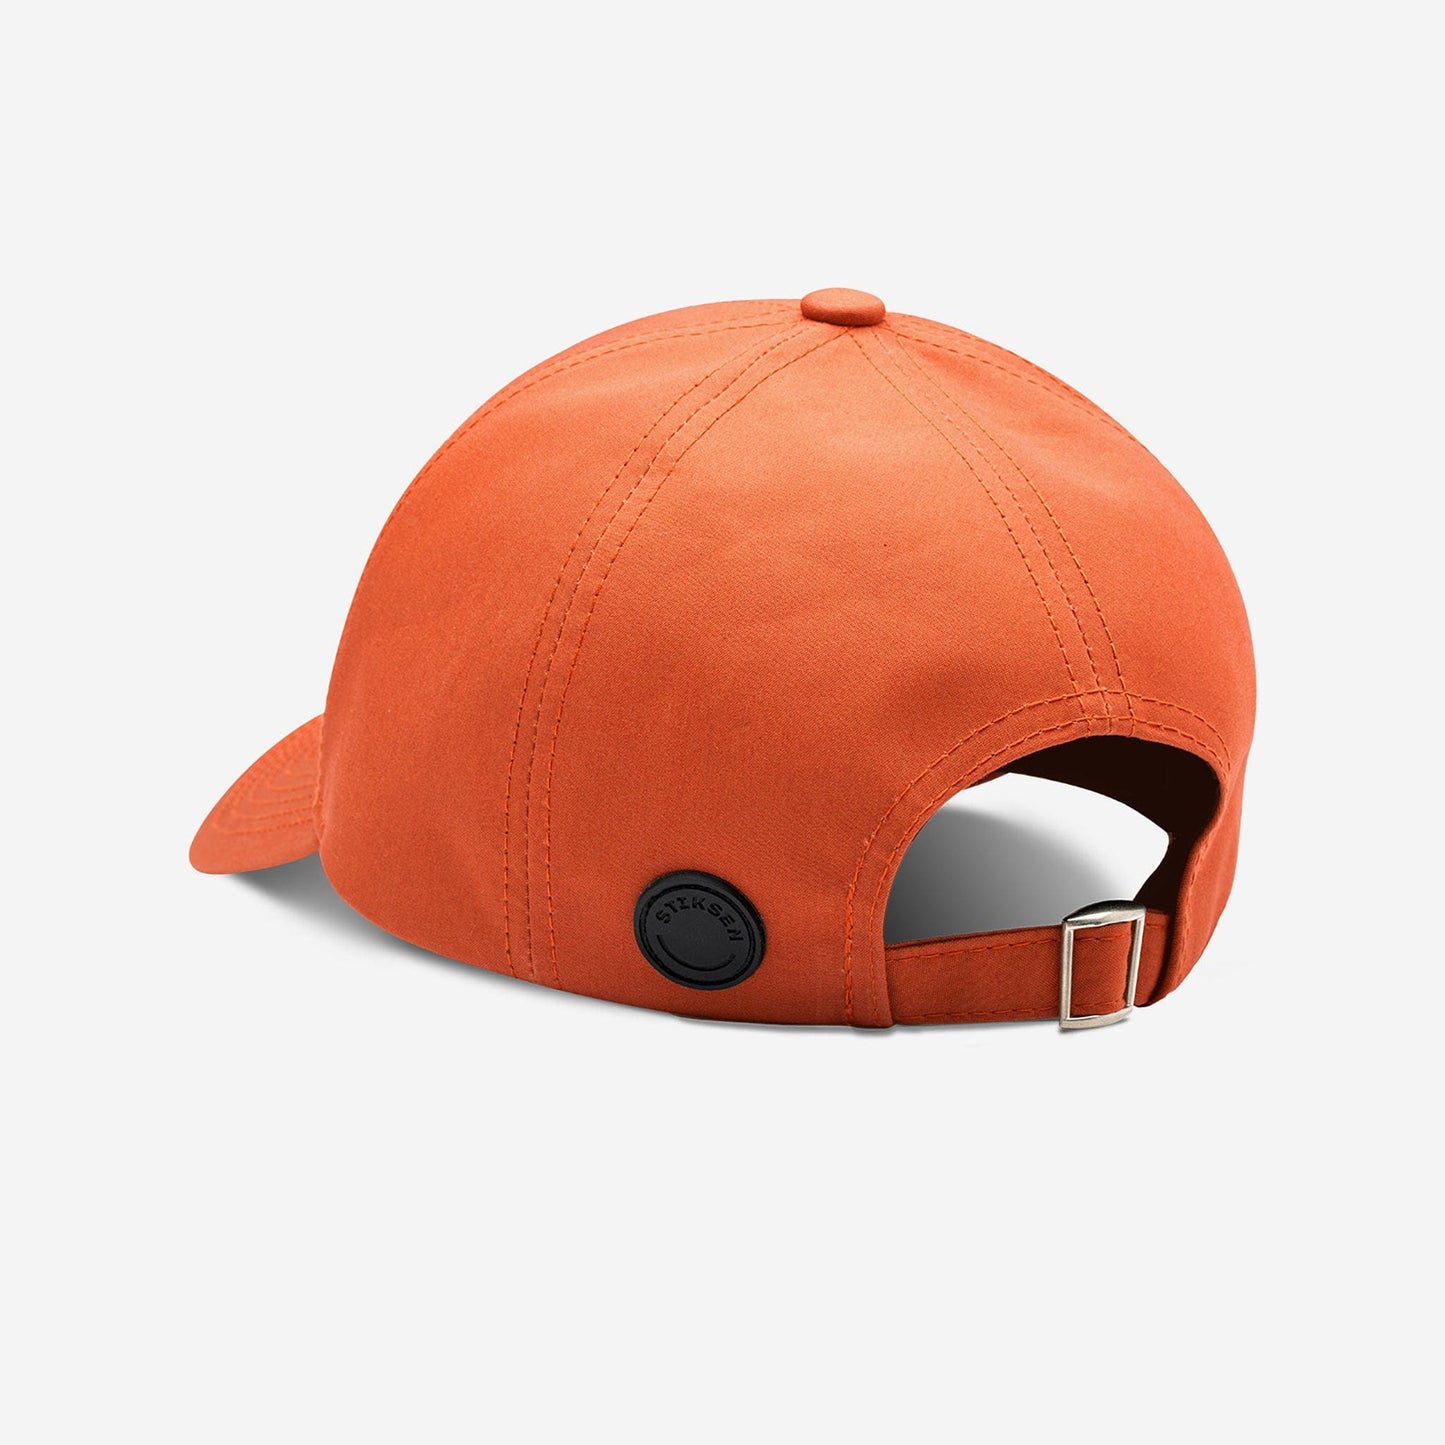 Waterproof All Weather Baseball Cap, Orange